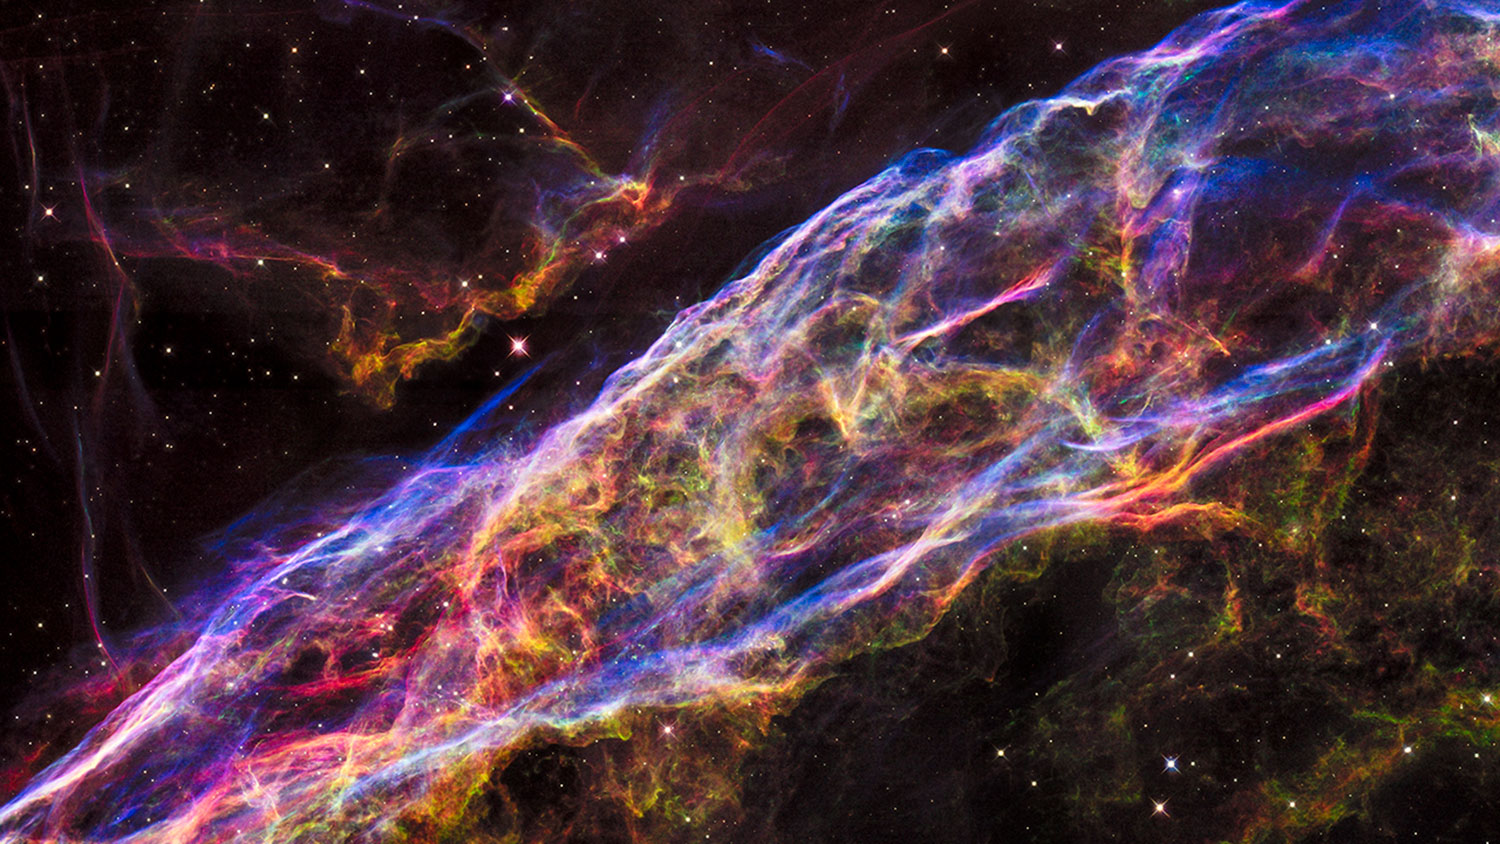 colorful image of a supernova